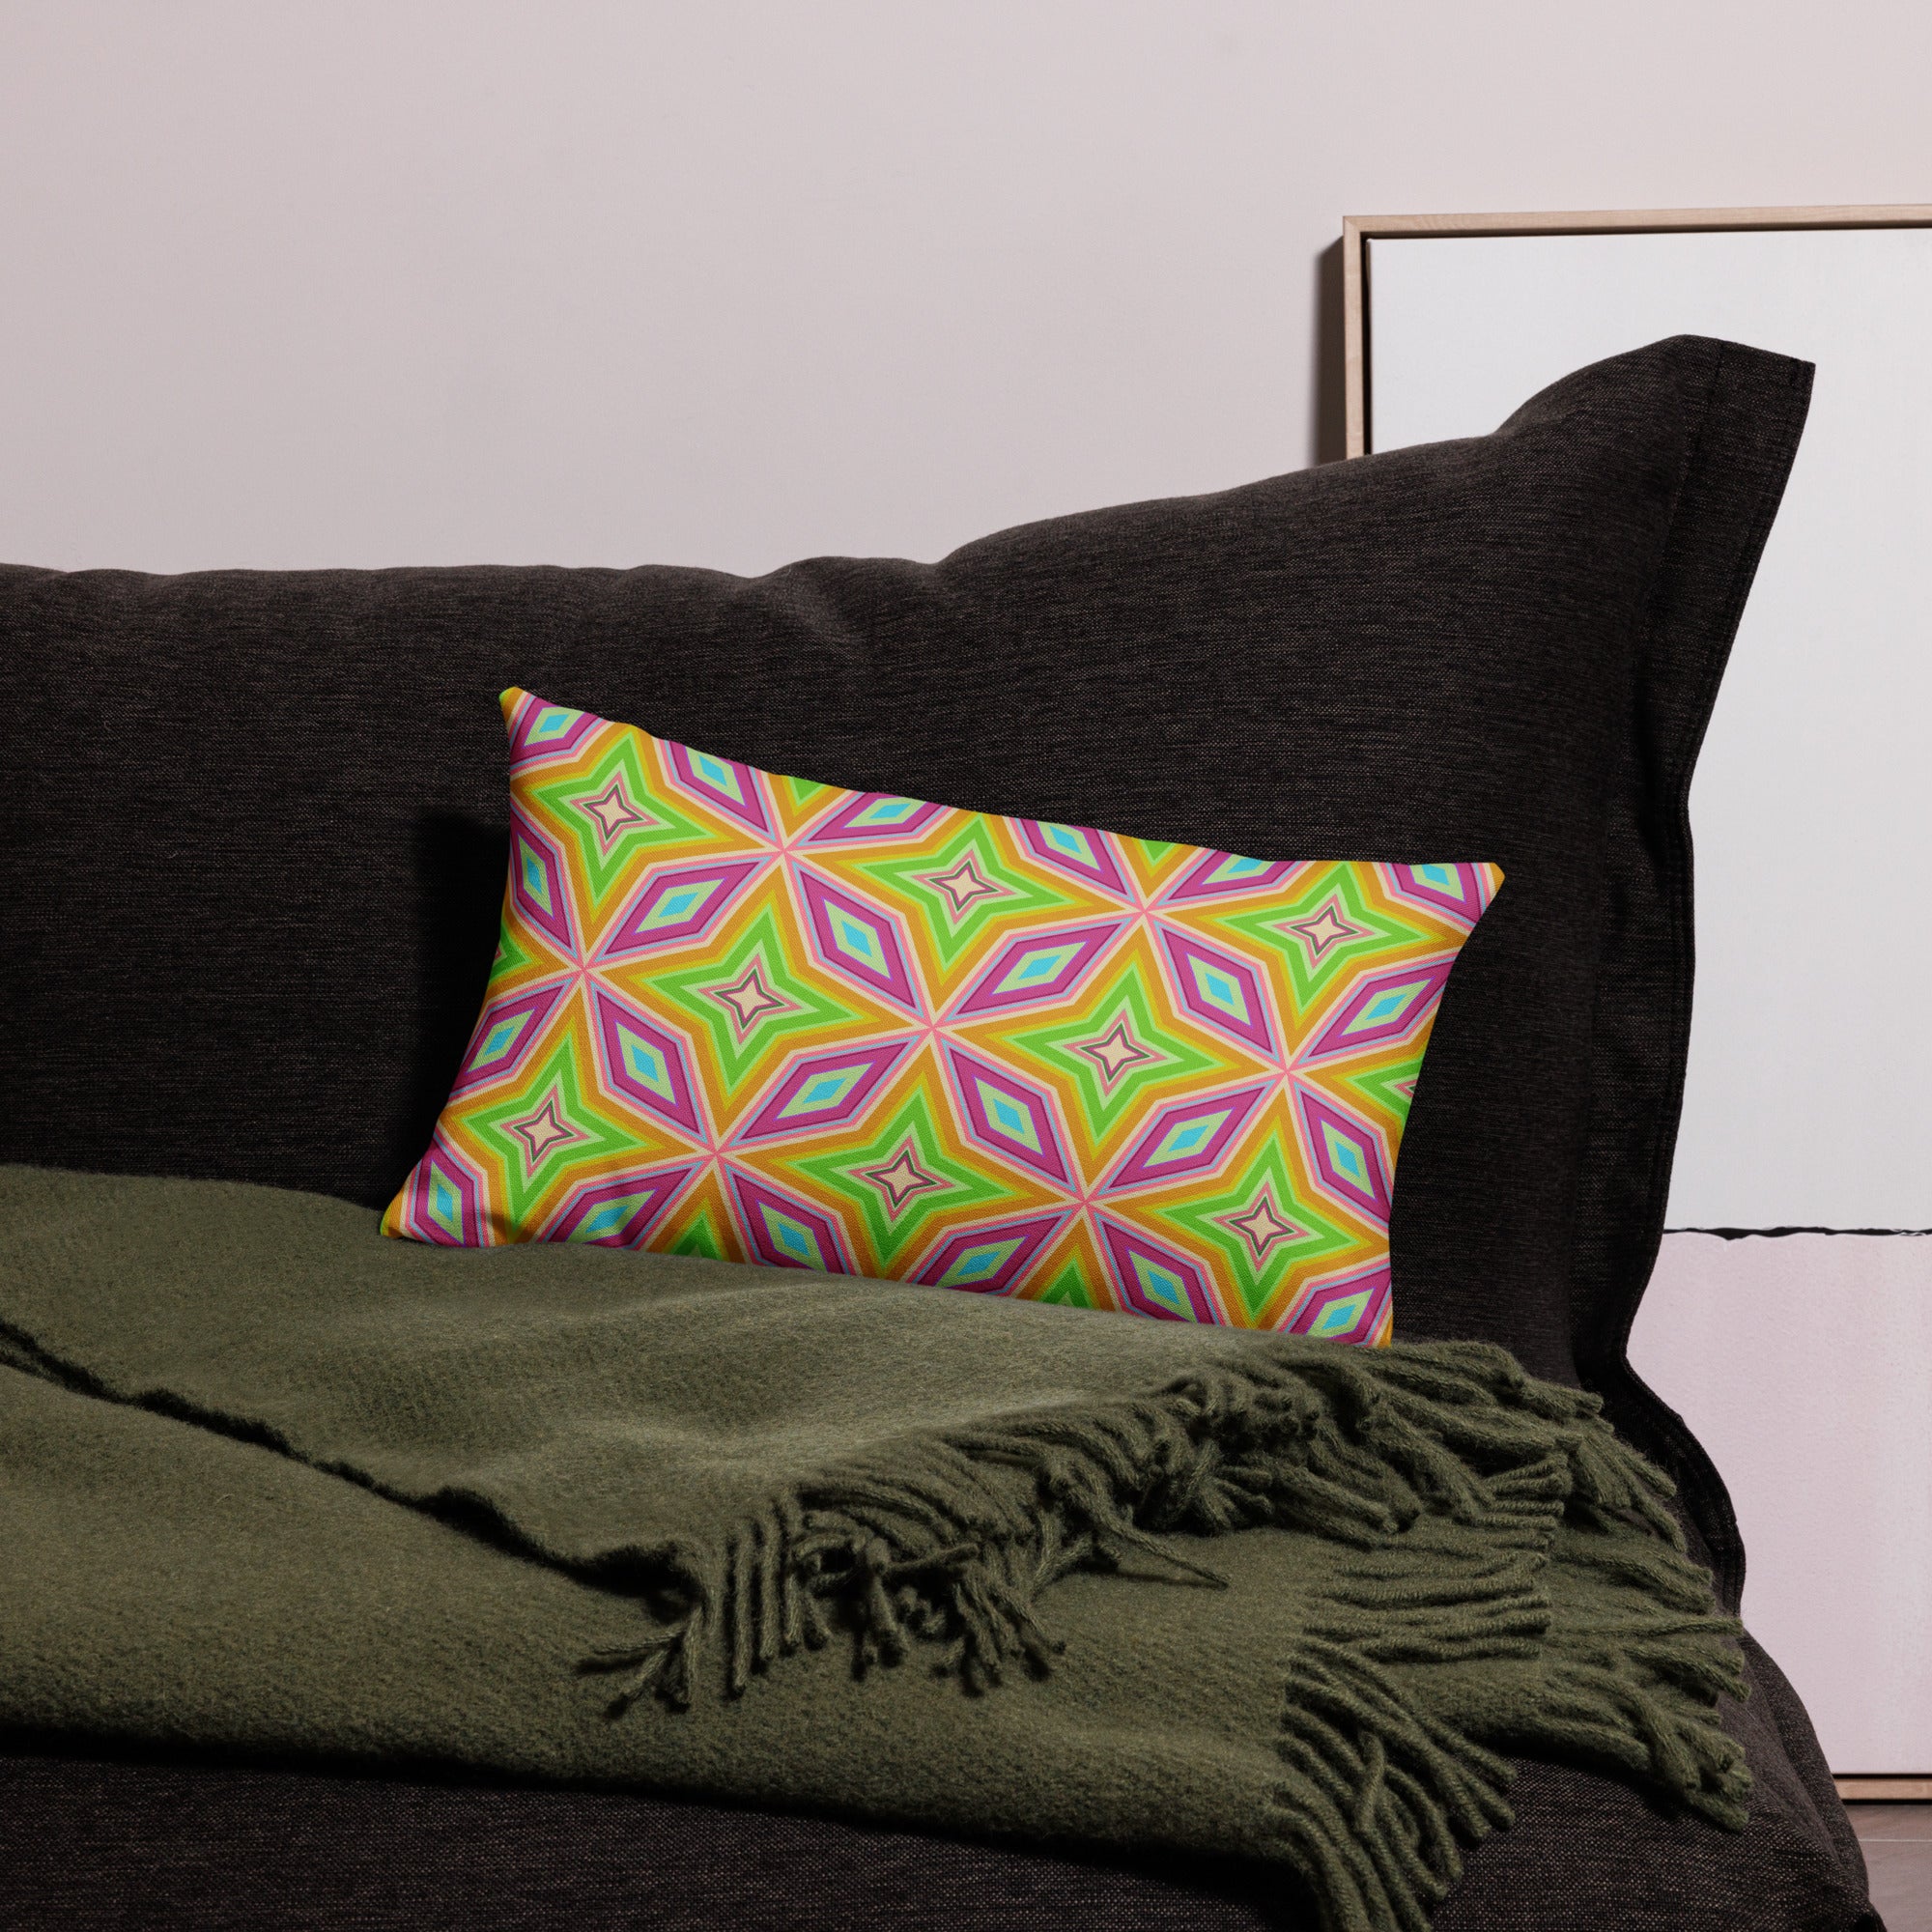 Colorful Artistic Brushstrokes Premium Pillow in Living Room Setting